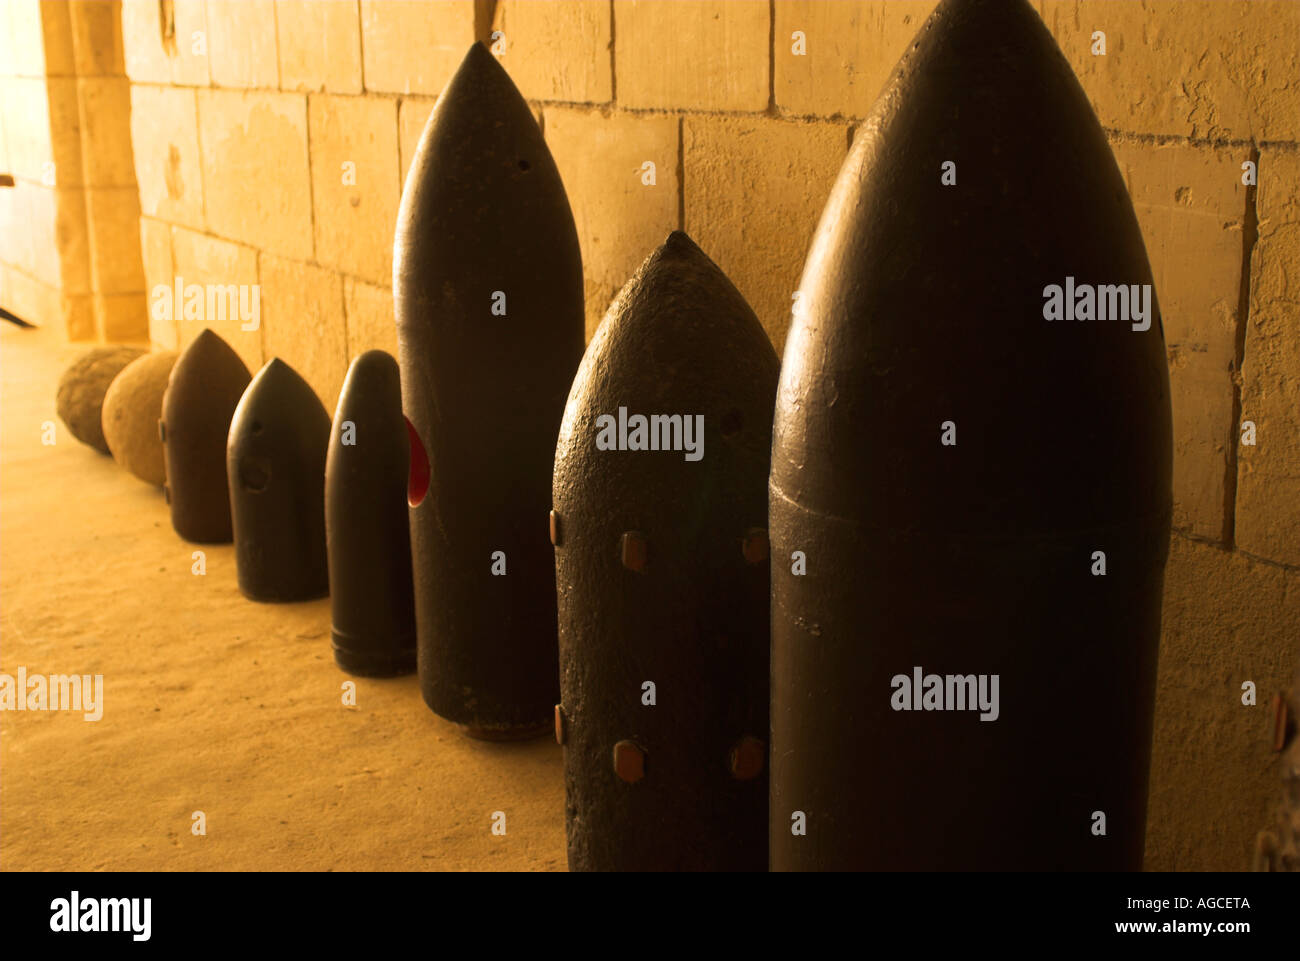 100 Ton gun shells at fort rinella, kalkara malta. Stock Photo